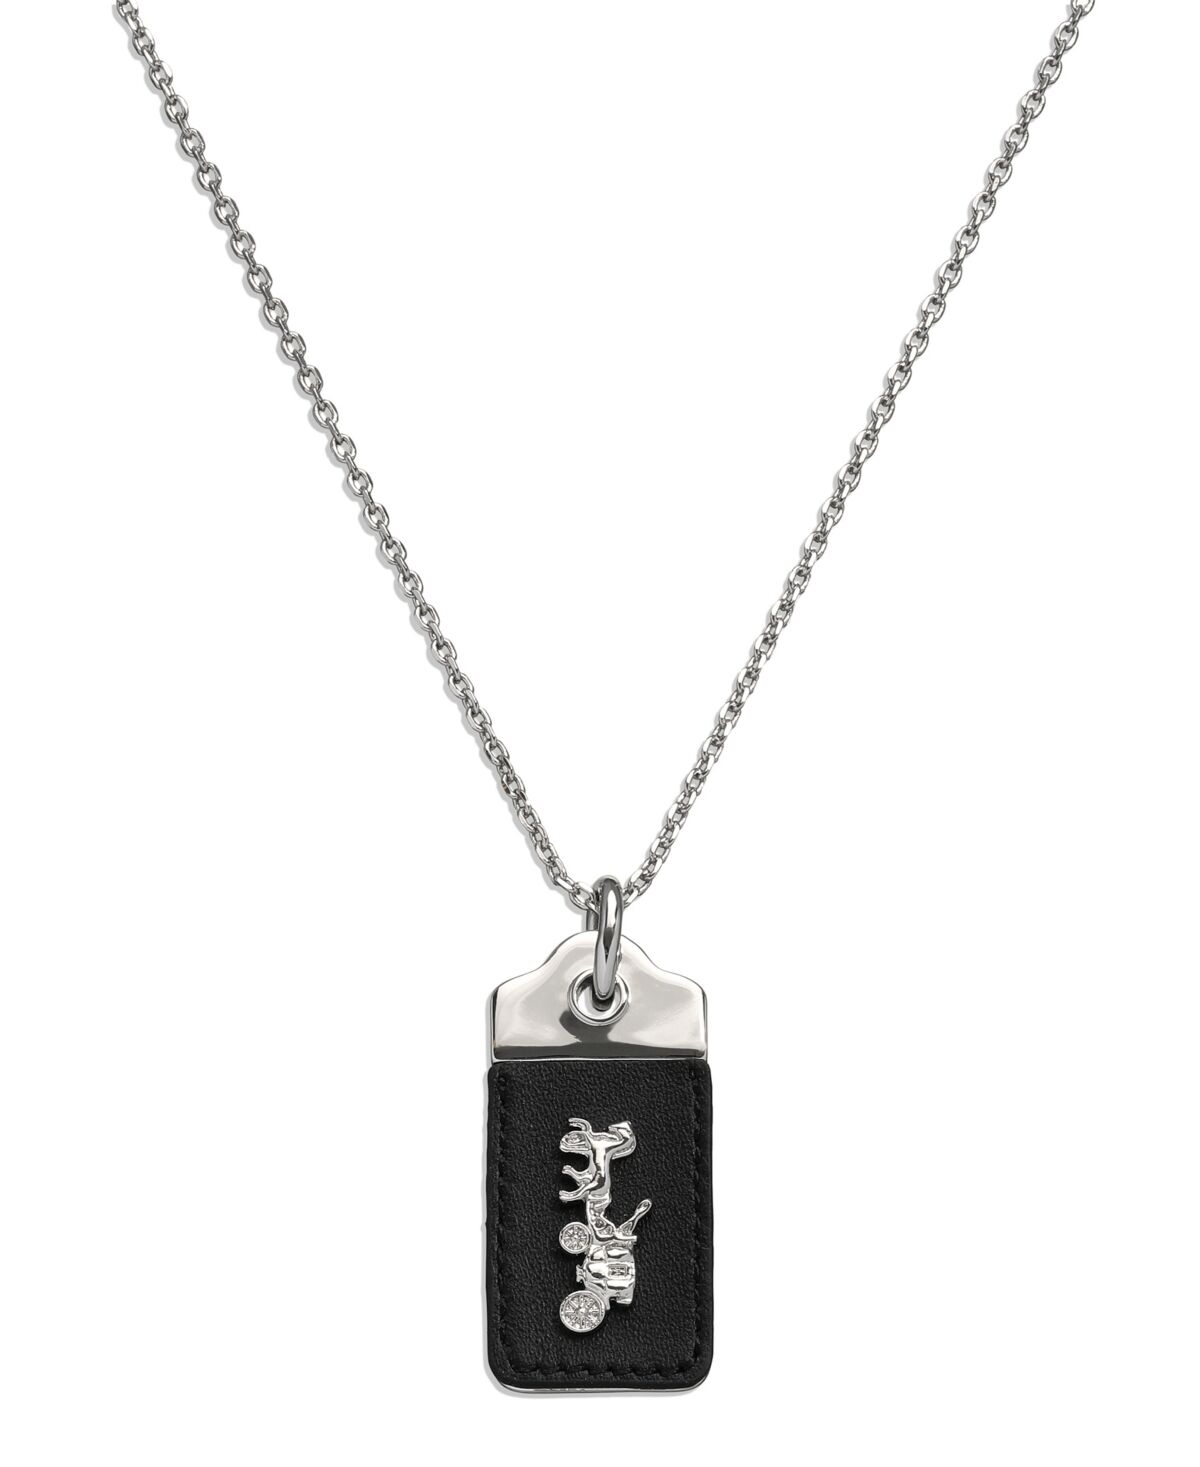 Coach Black Signature Motif Leather Tag Pendant Necklace - Black, Rhodium